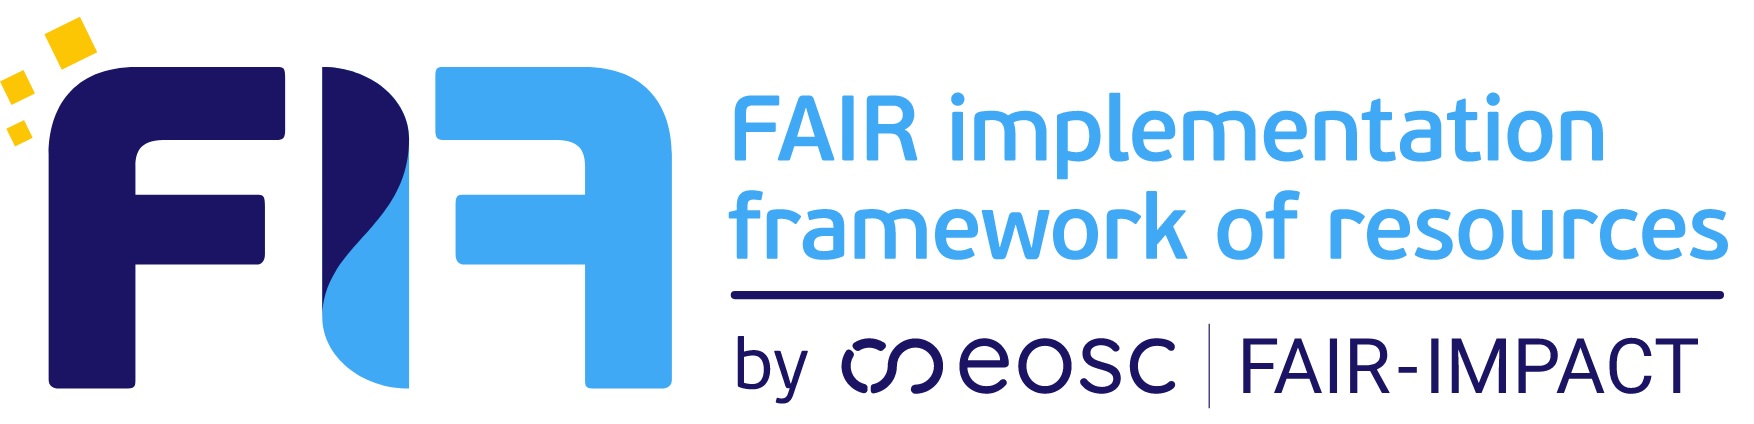 FAIR Implementation Framework